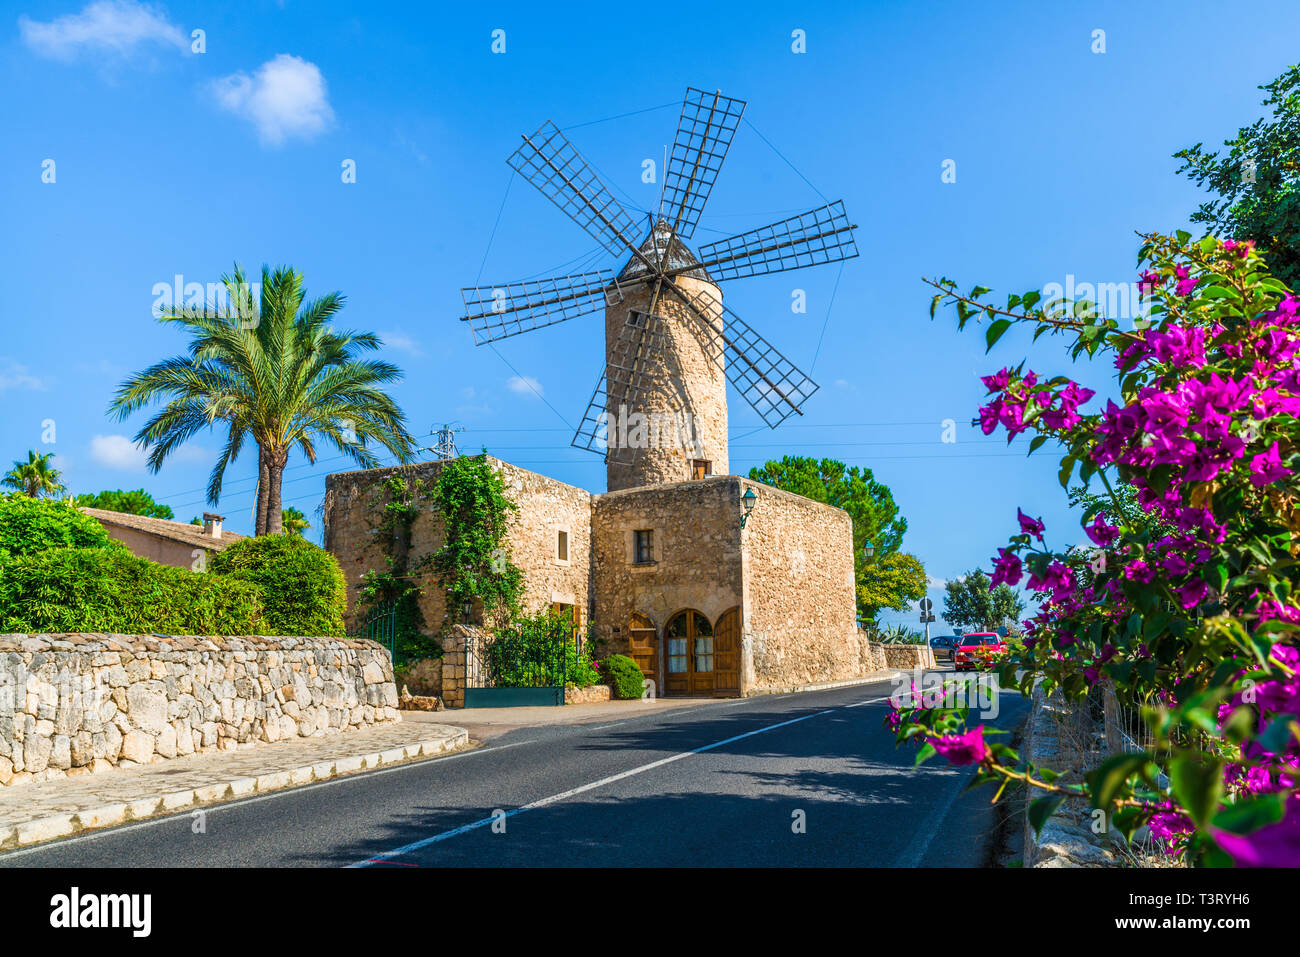 Mittelalterliche Mühle in Palma, Mallorca, Balearen, Spanien  Stockfotografie - Alamy